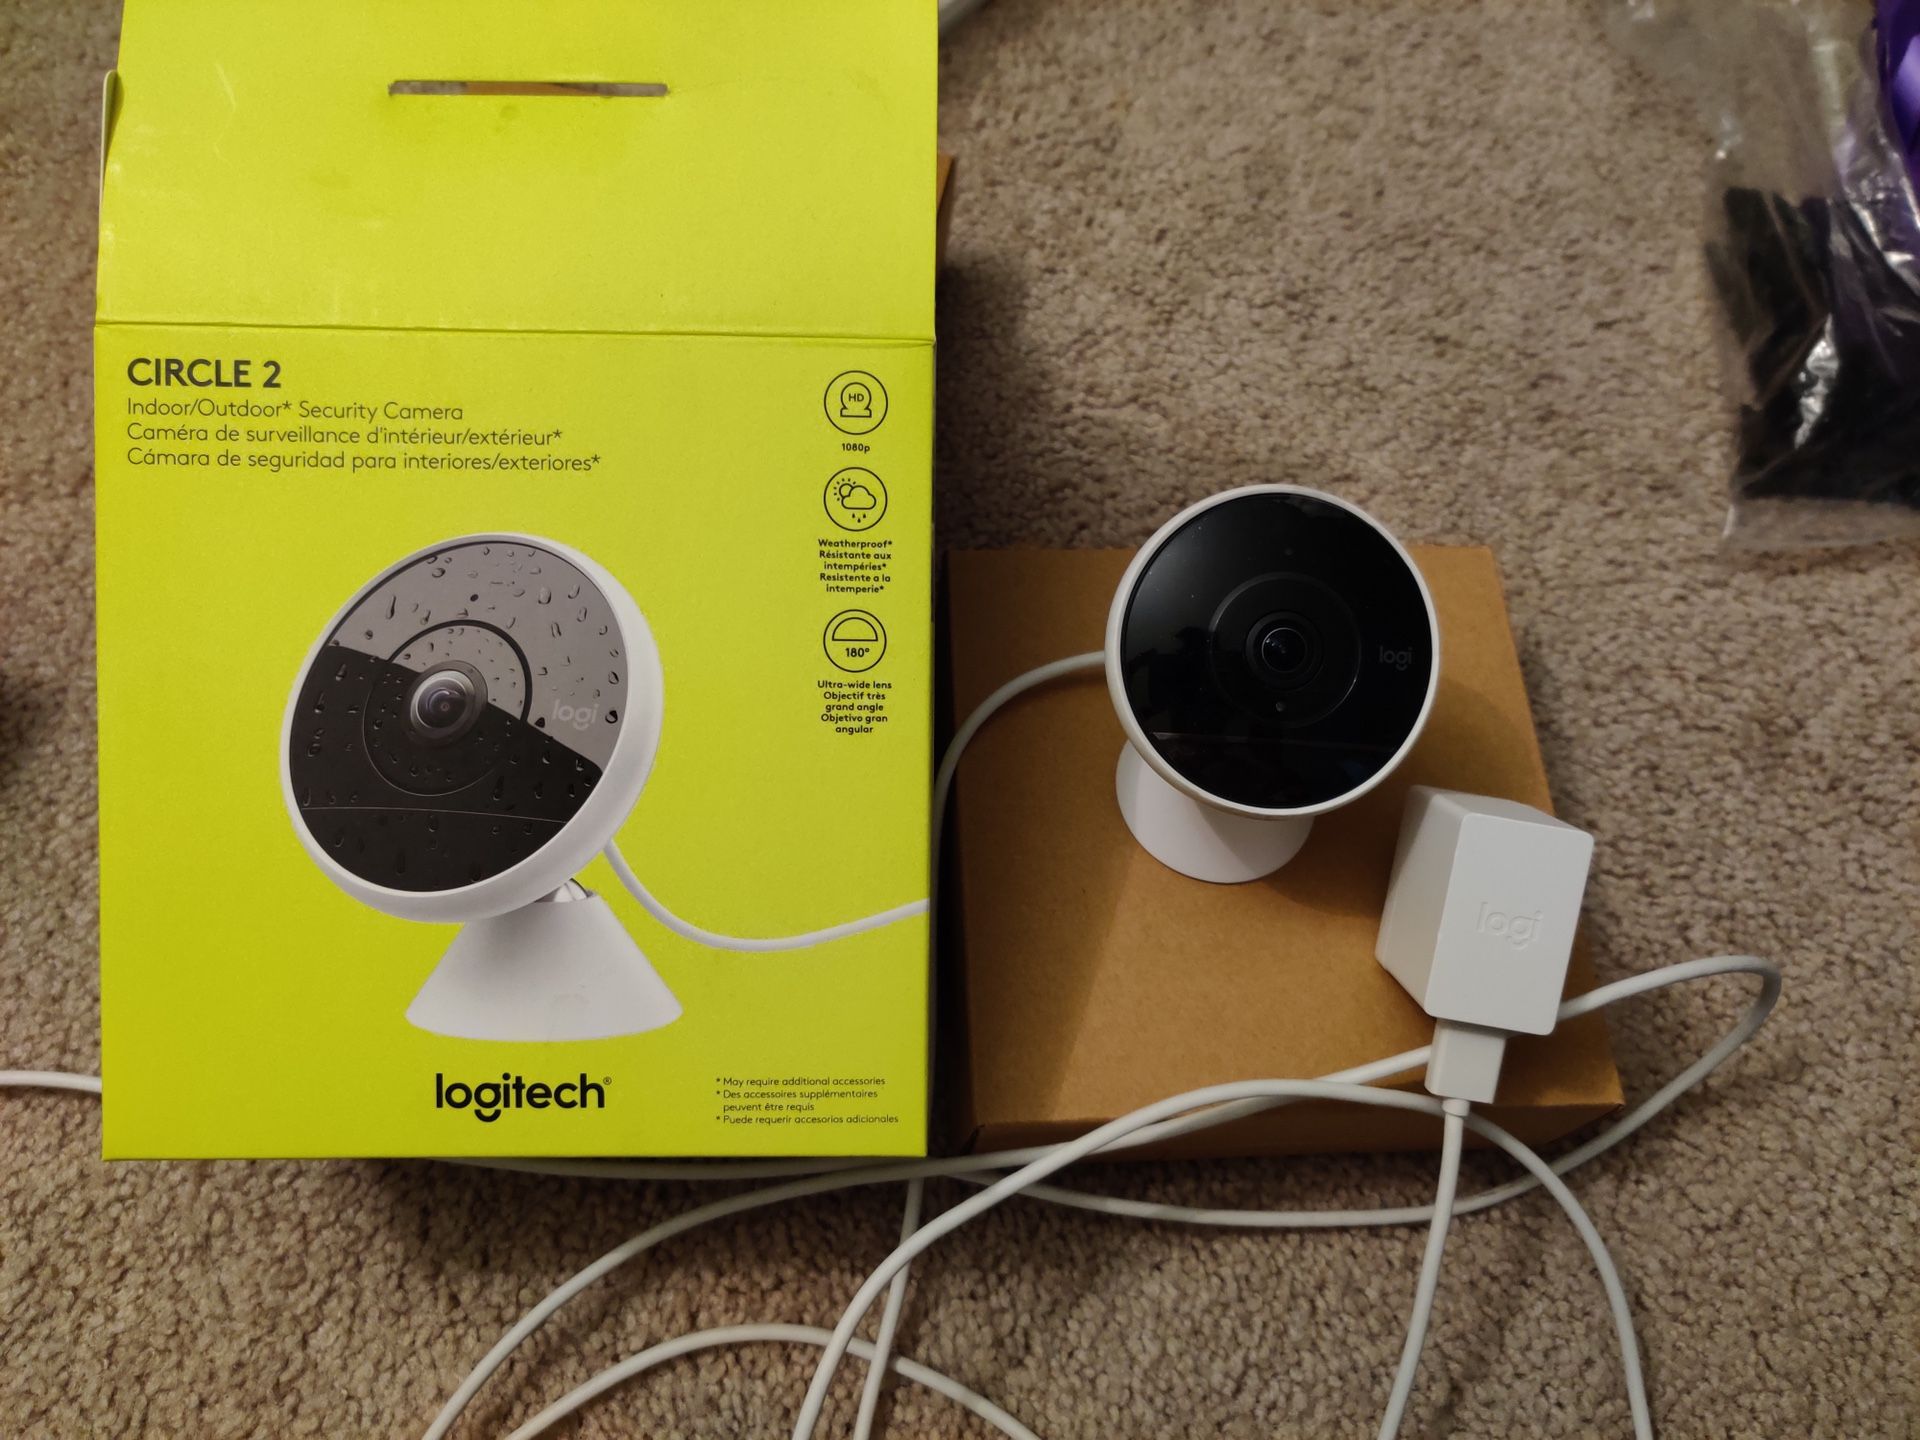 Logitech Circle 2 Wired Home Security Camera Indoor/Outdoor Weatherproof